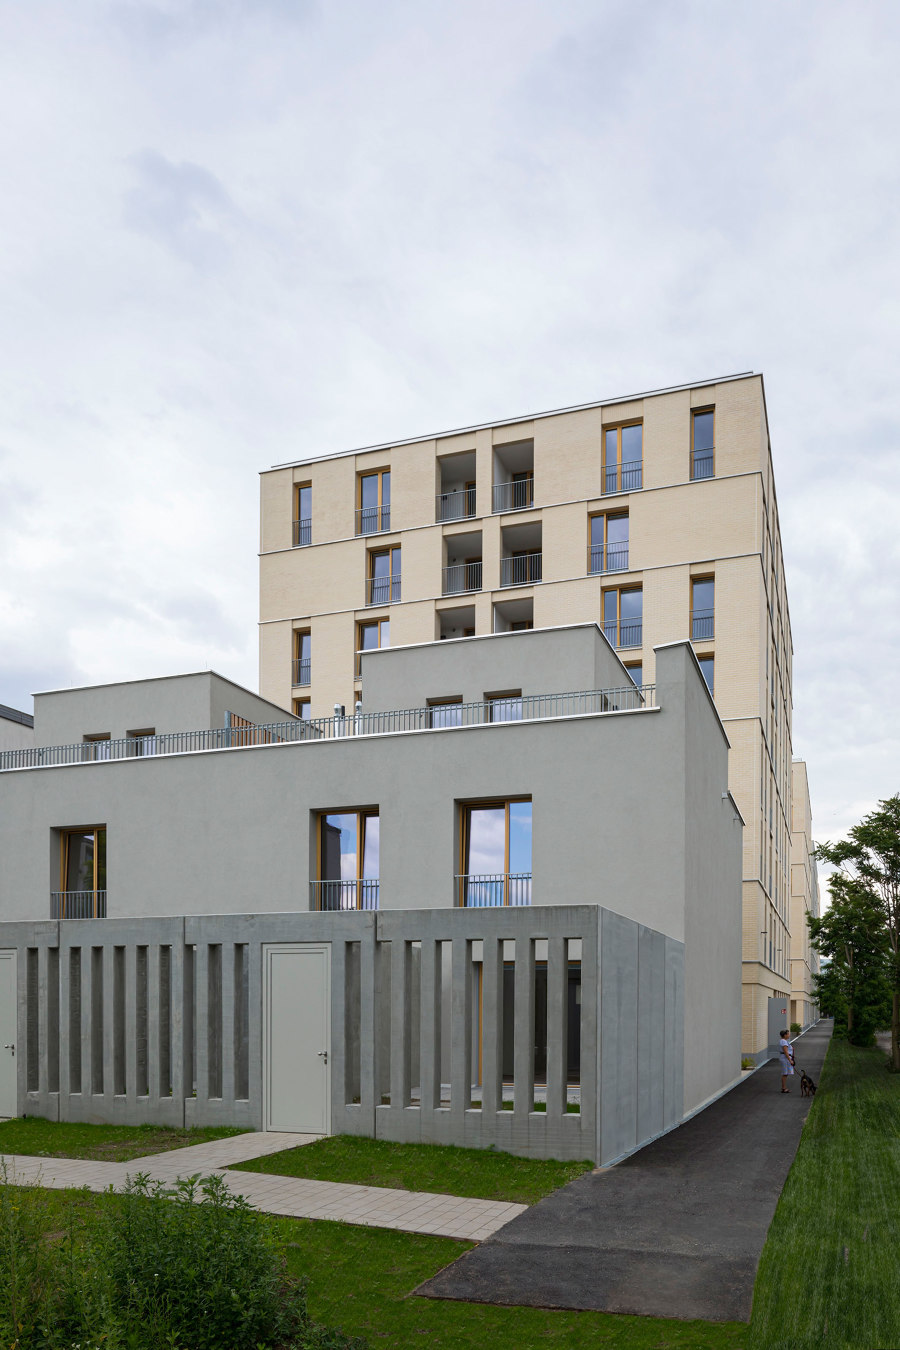 Residential Complex VORGARTENSTRASSE 98-106 de BEHF Architects | Urbanizaciones